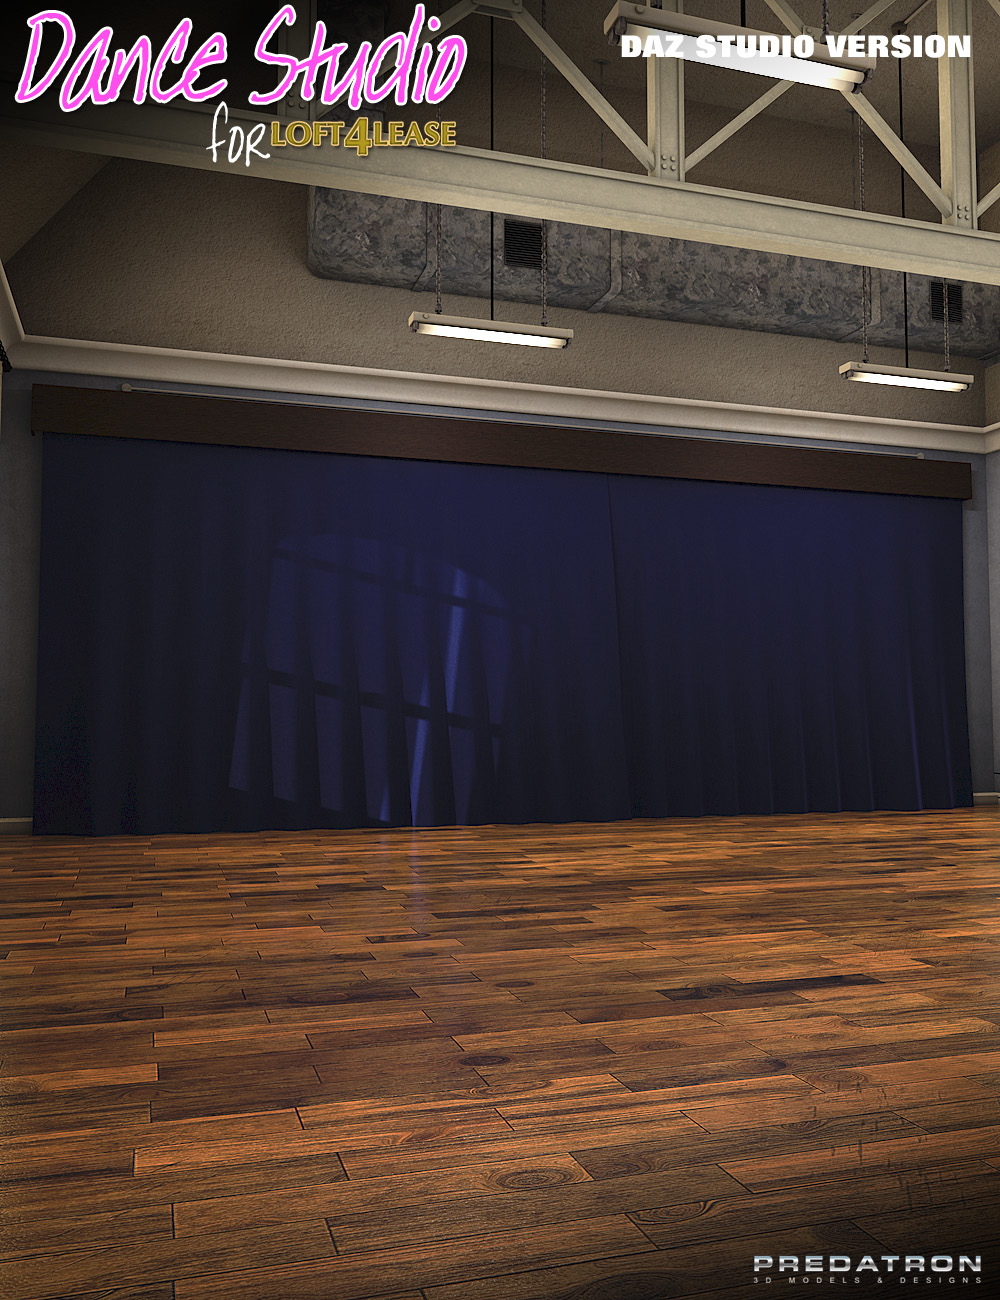 Dance Studio Add-On (DAZ Studio) by: Predatron, 3D Models by Daz 3D